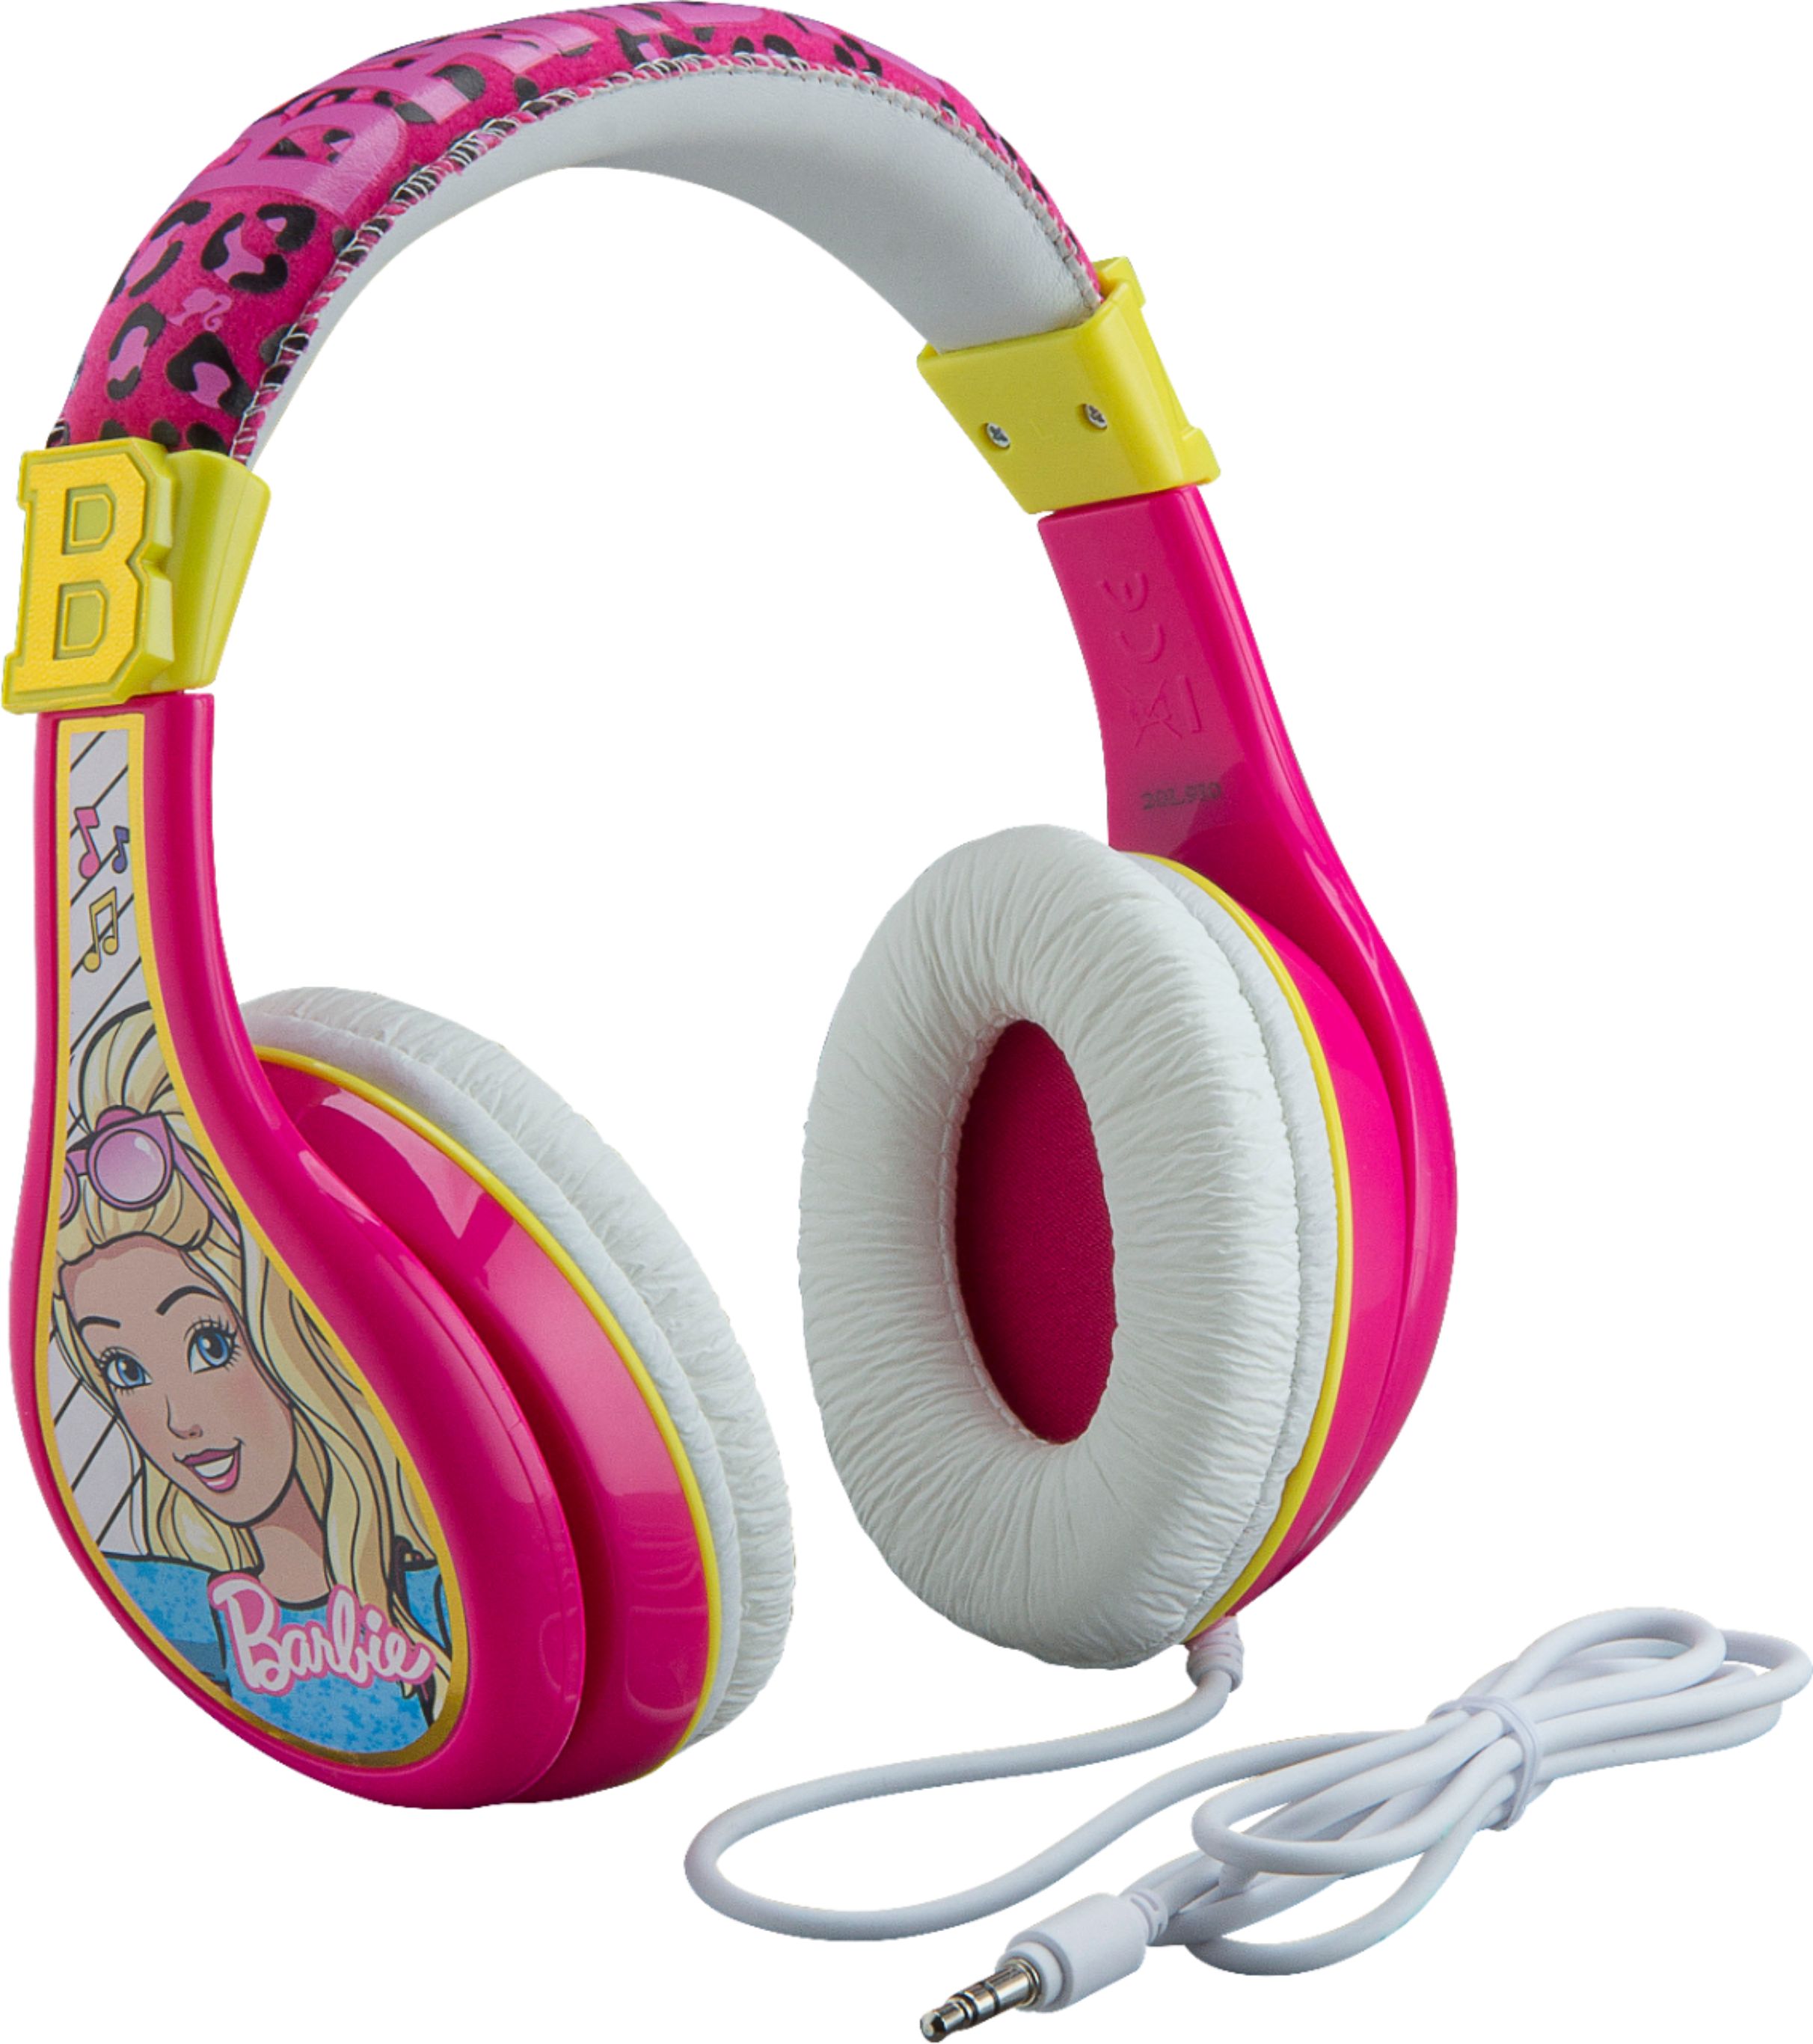 eKids Barbie Wired Over the Ear Headphones - Pink